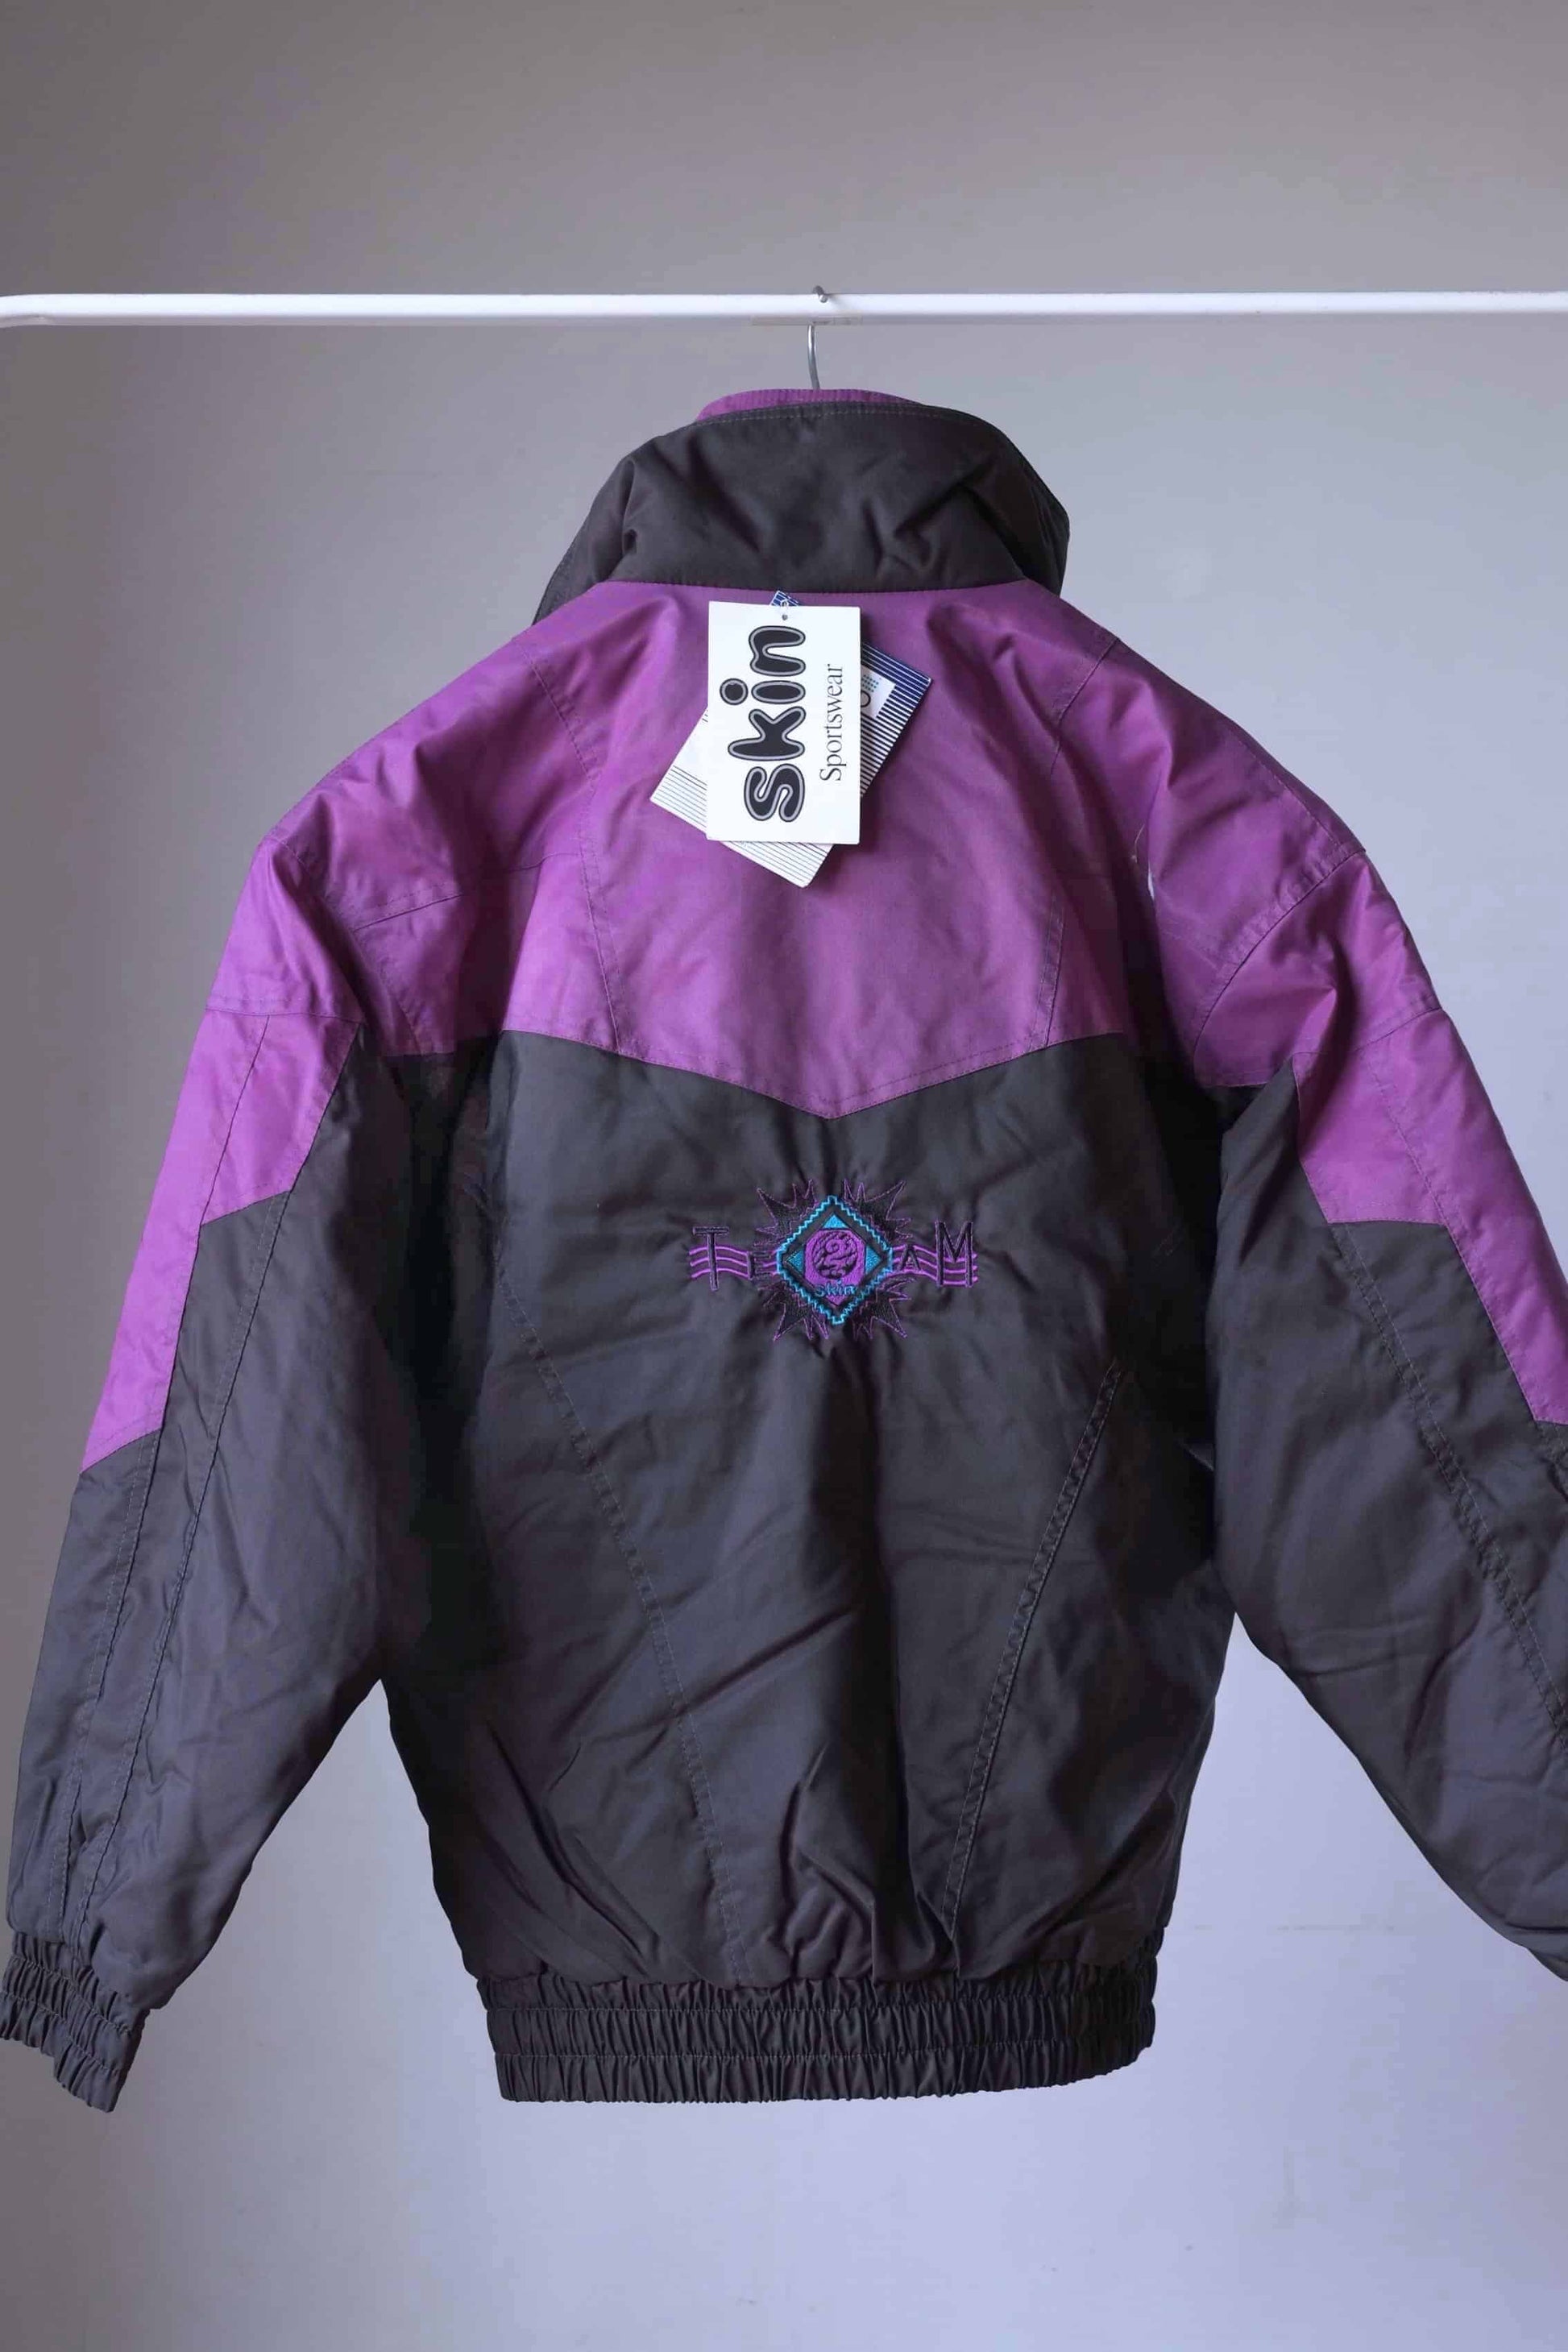 Back view of Vintage Men's 90's Ski Jacket black purple